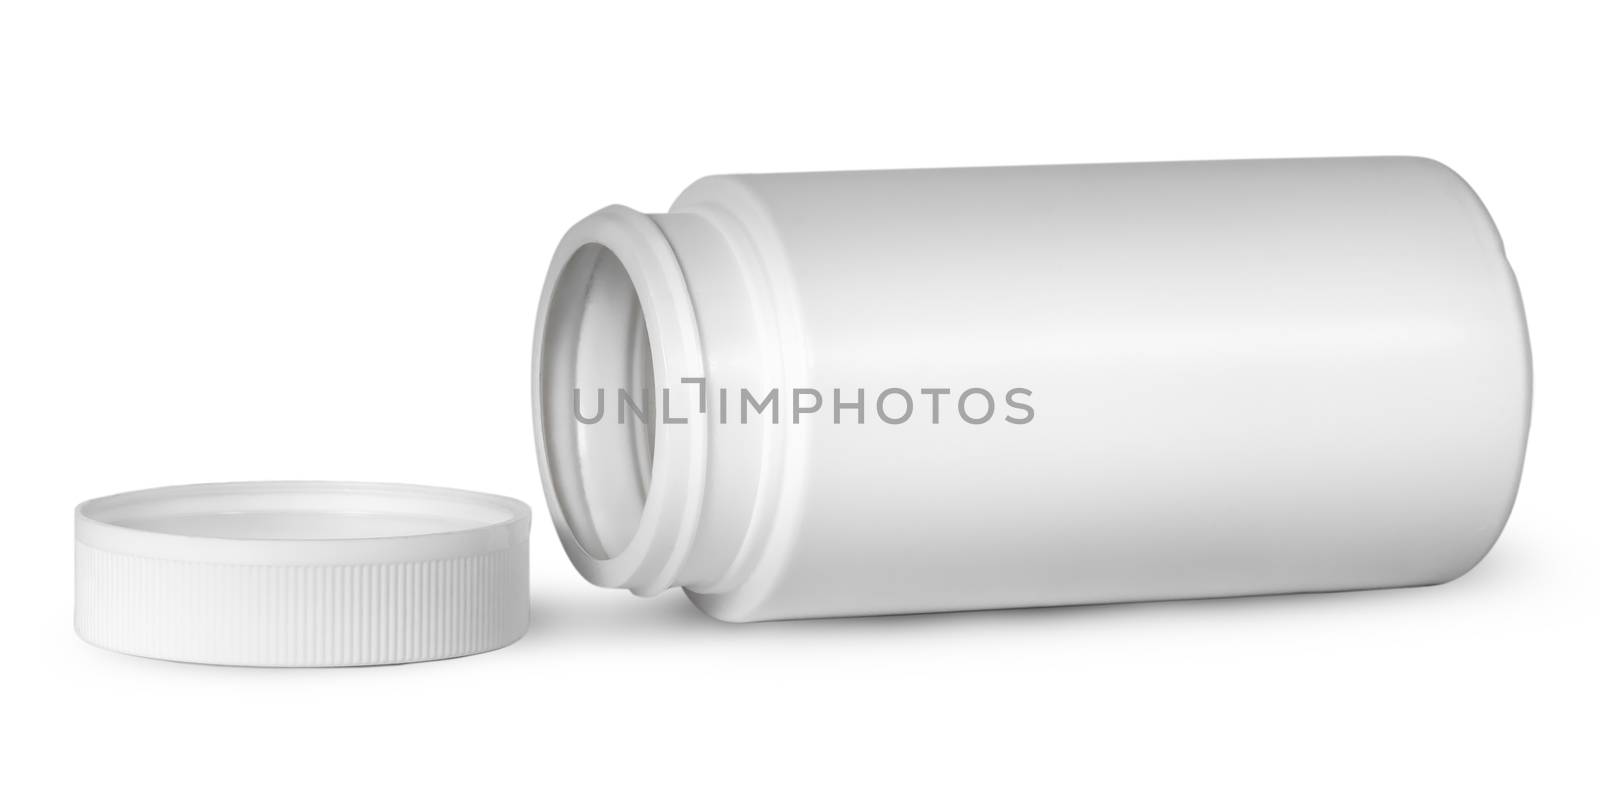 White plastic bottle for vitamins lying near lid isolated on white background